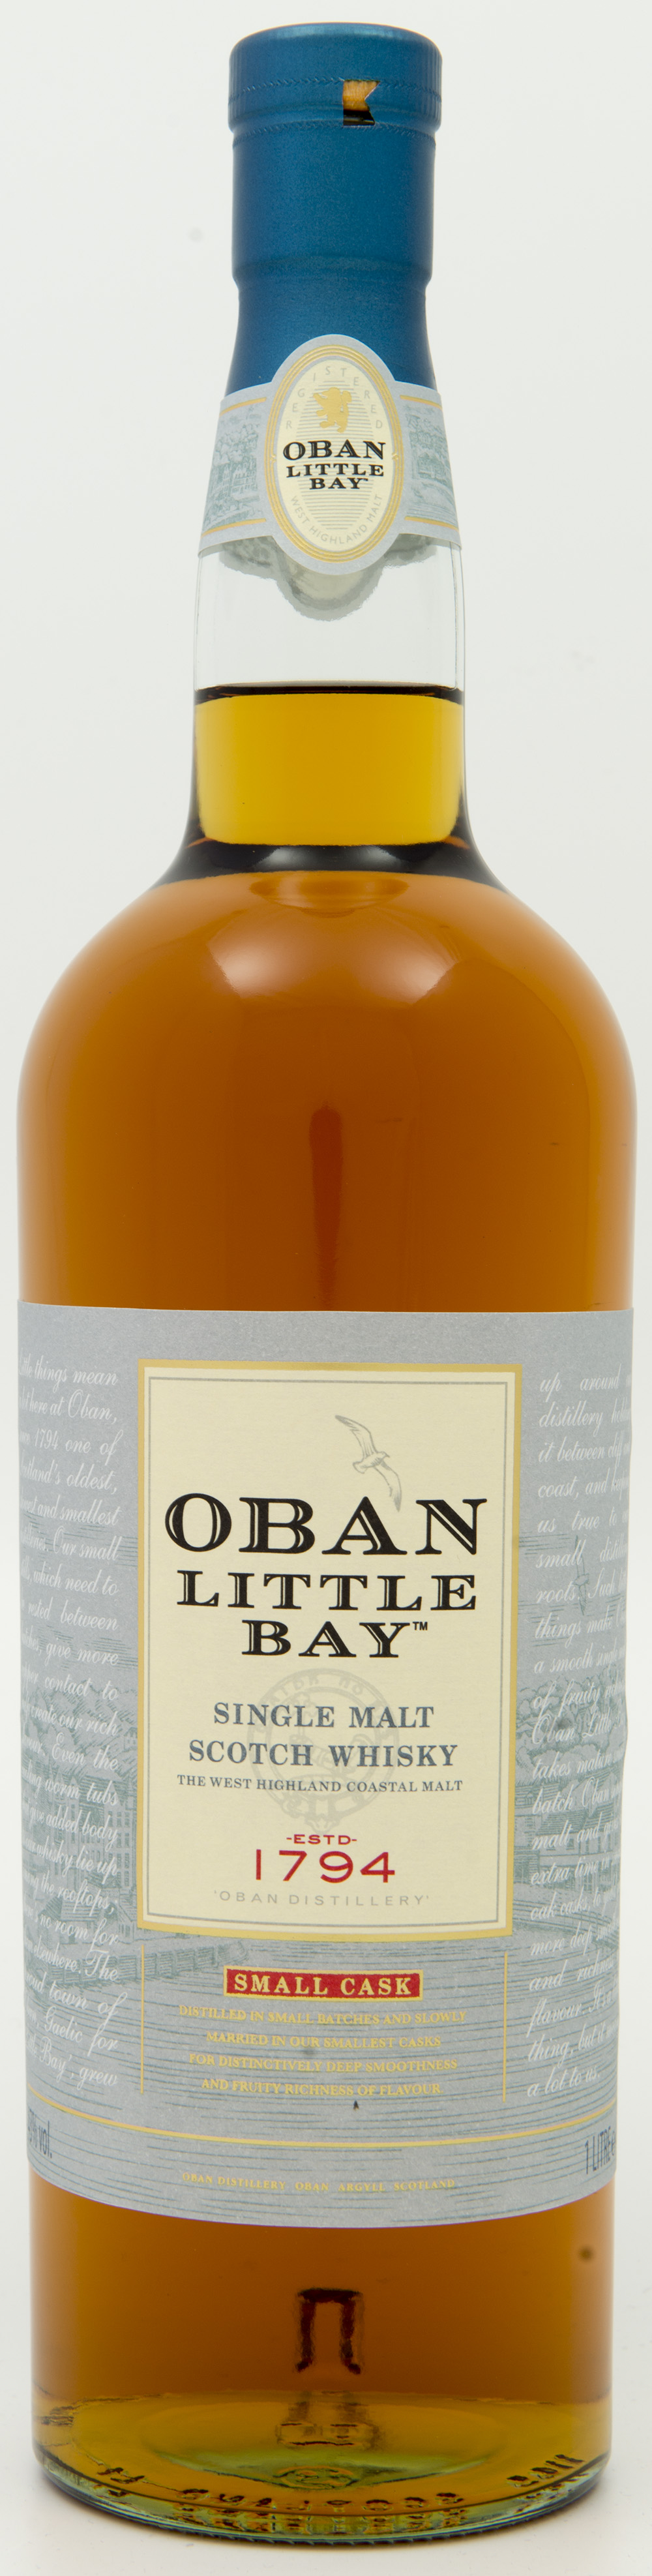 Billede: DSC_8212 - Oban Little Bay - bottle front.jpg